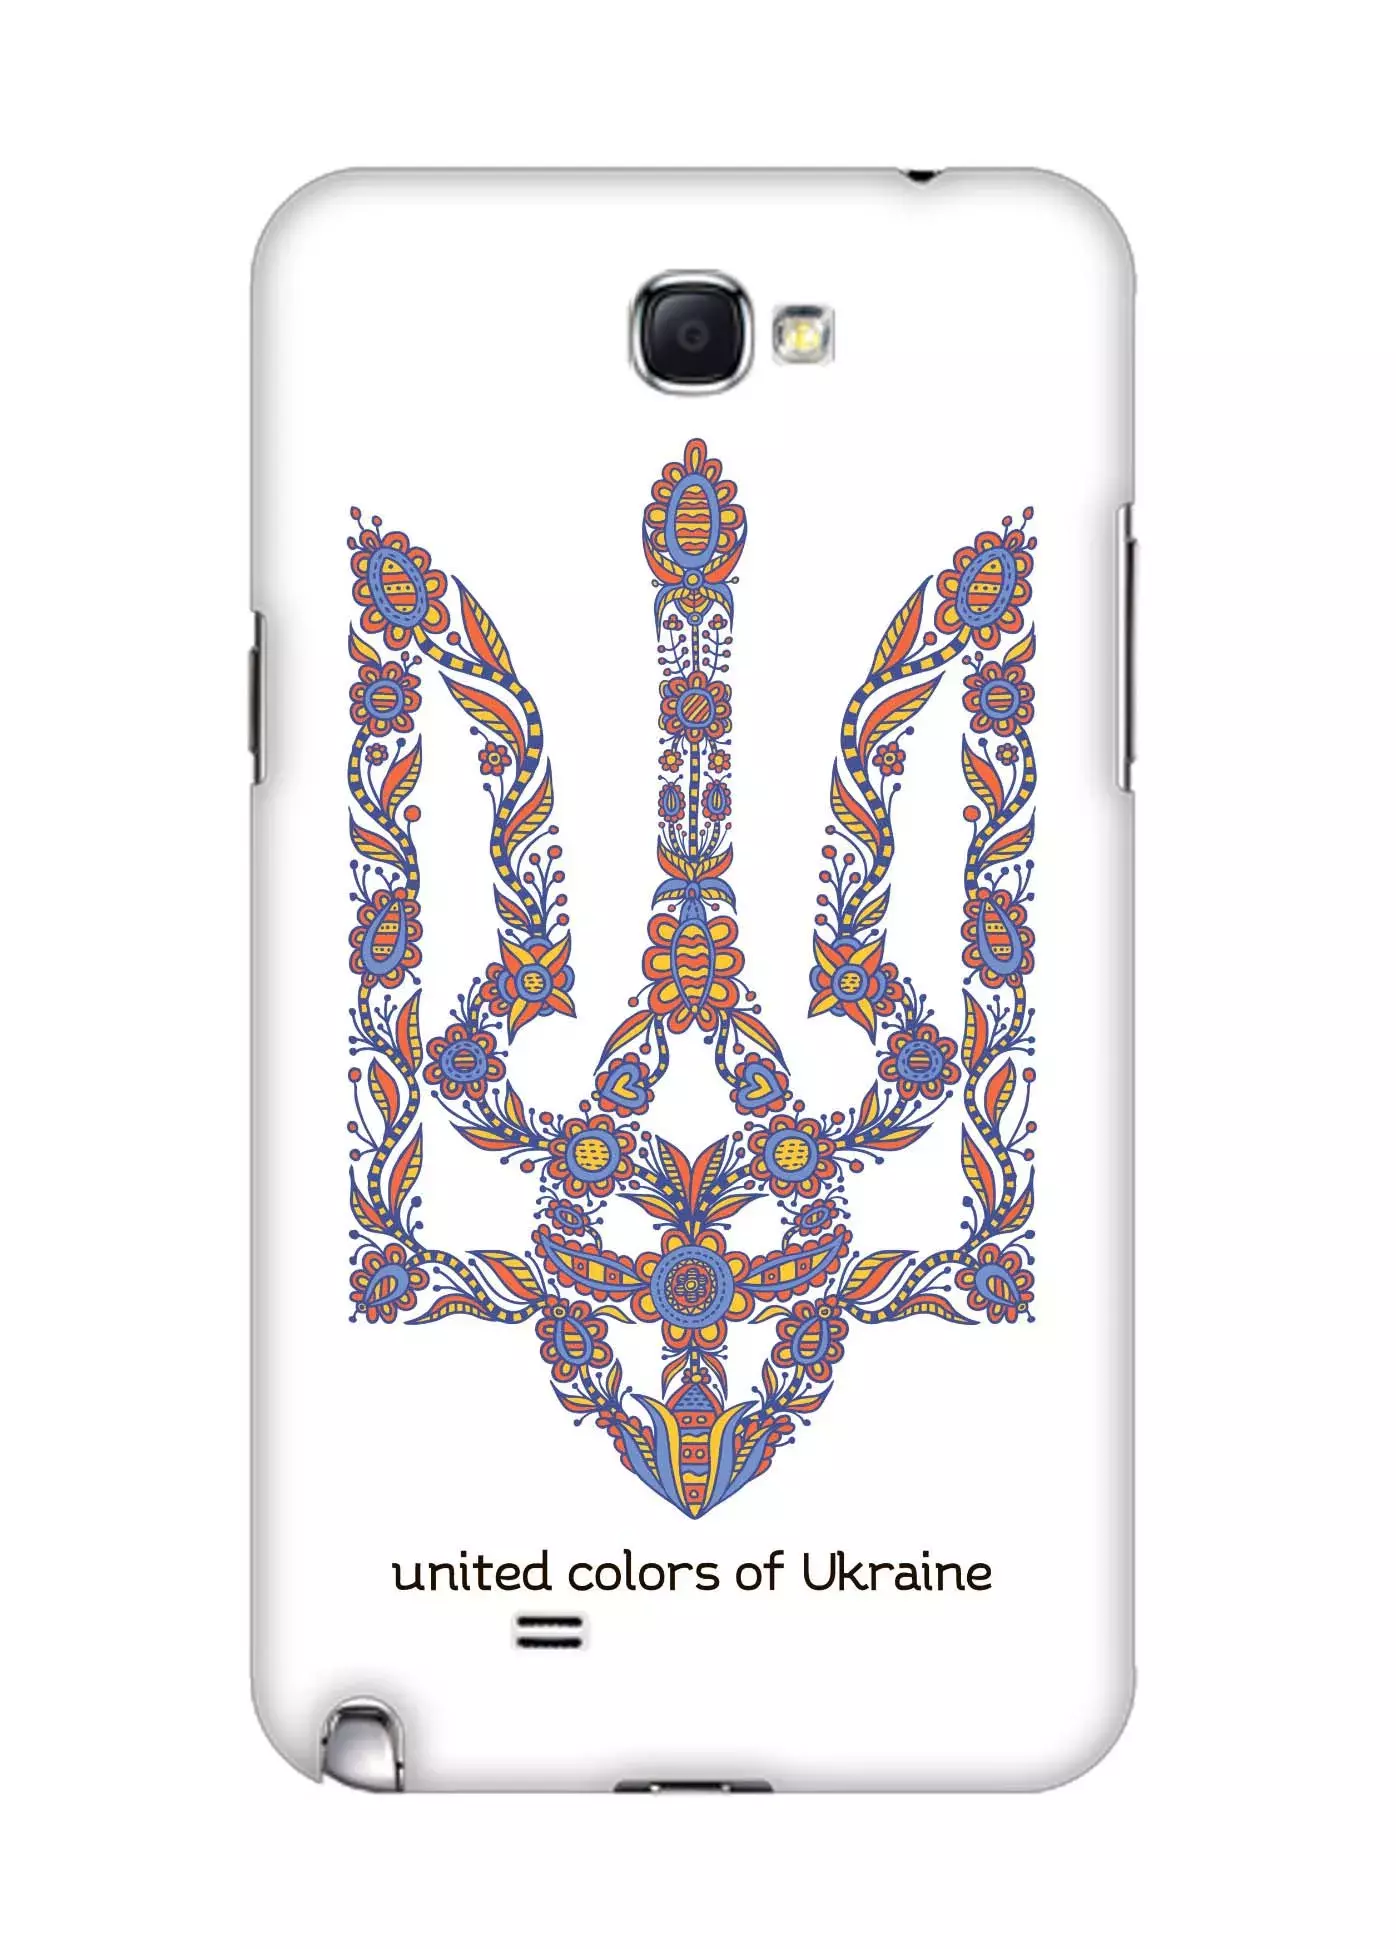 Чехол для Galaxy Note 2 - Тризуб Украины